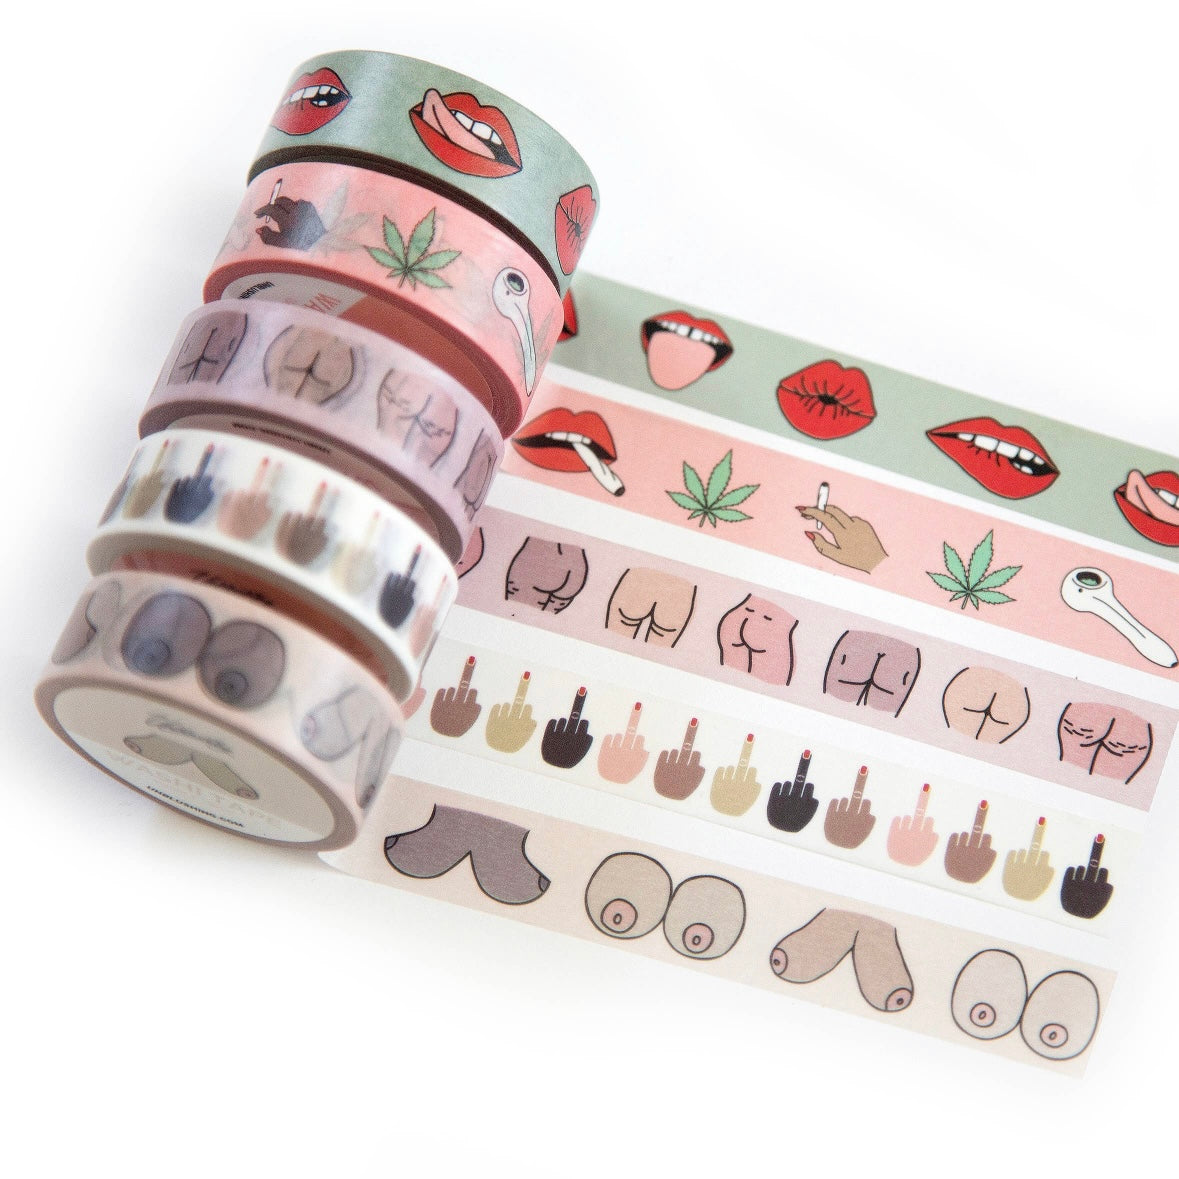 Washi Tape - Lips